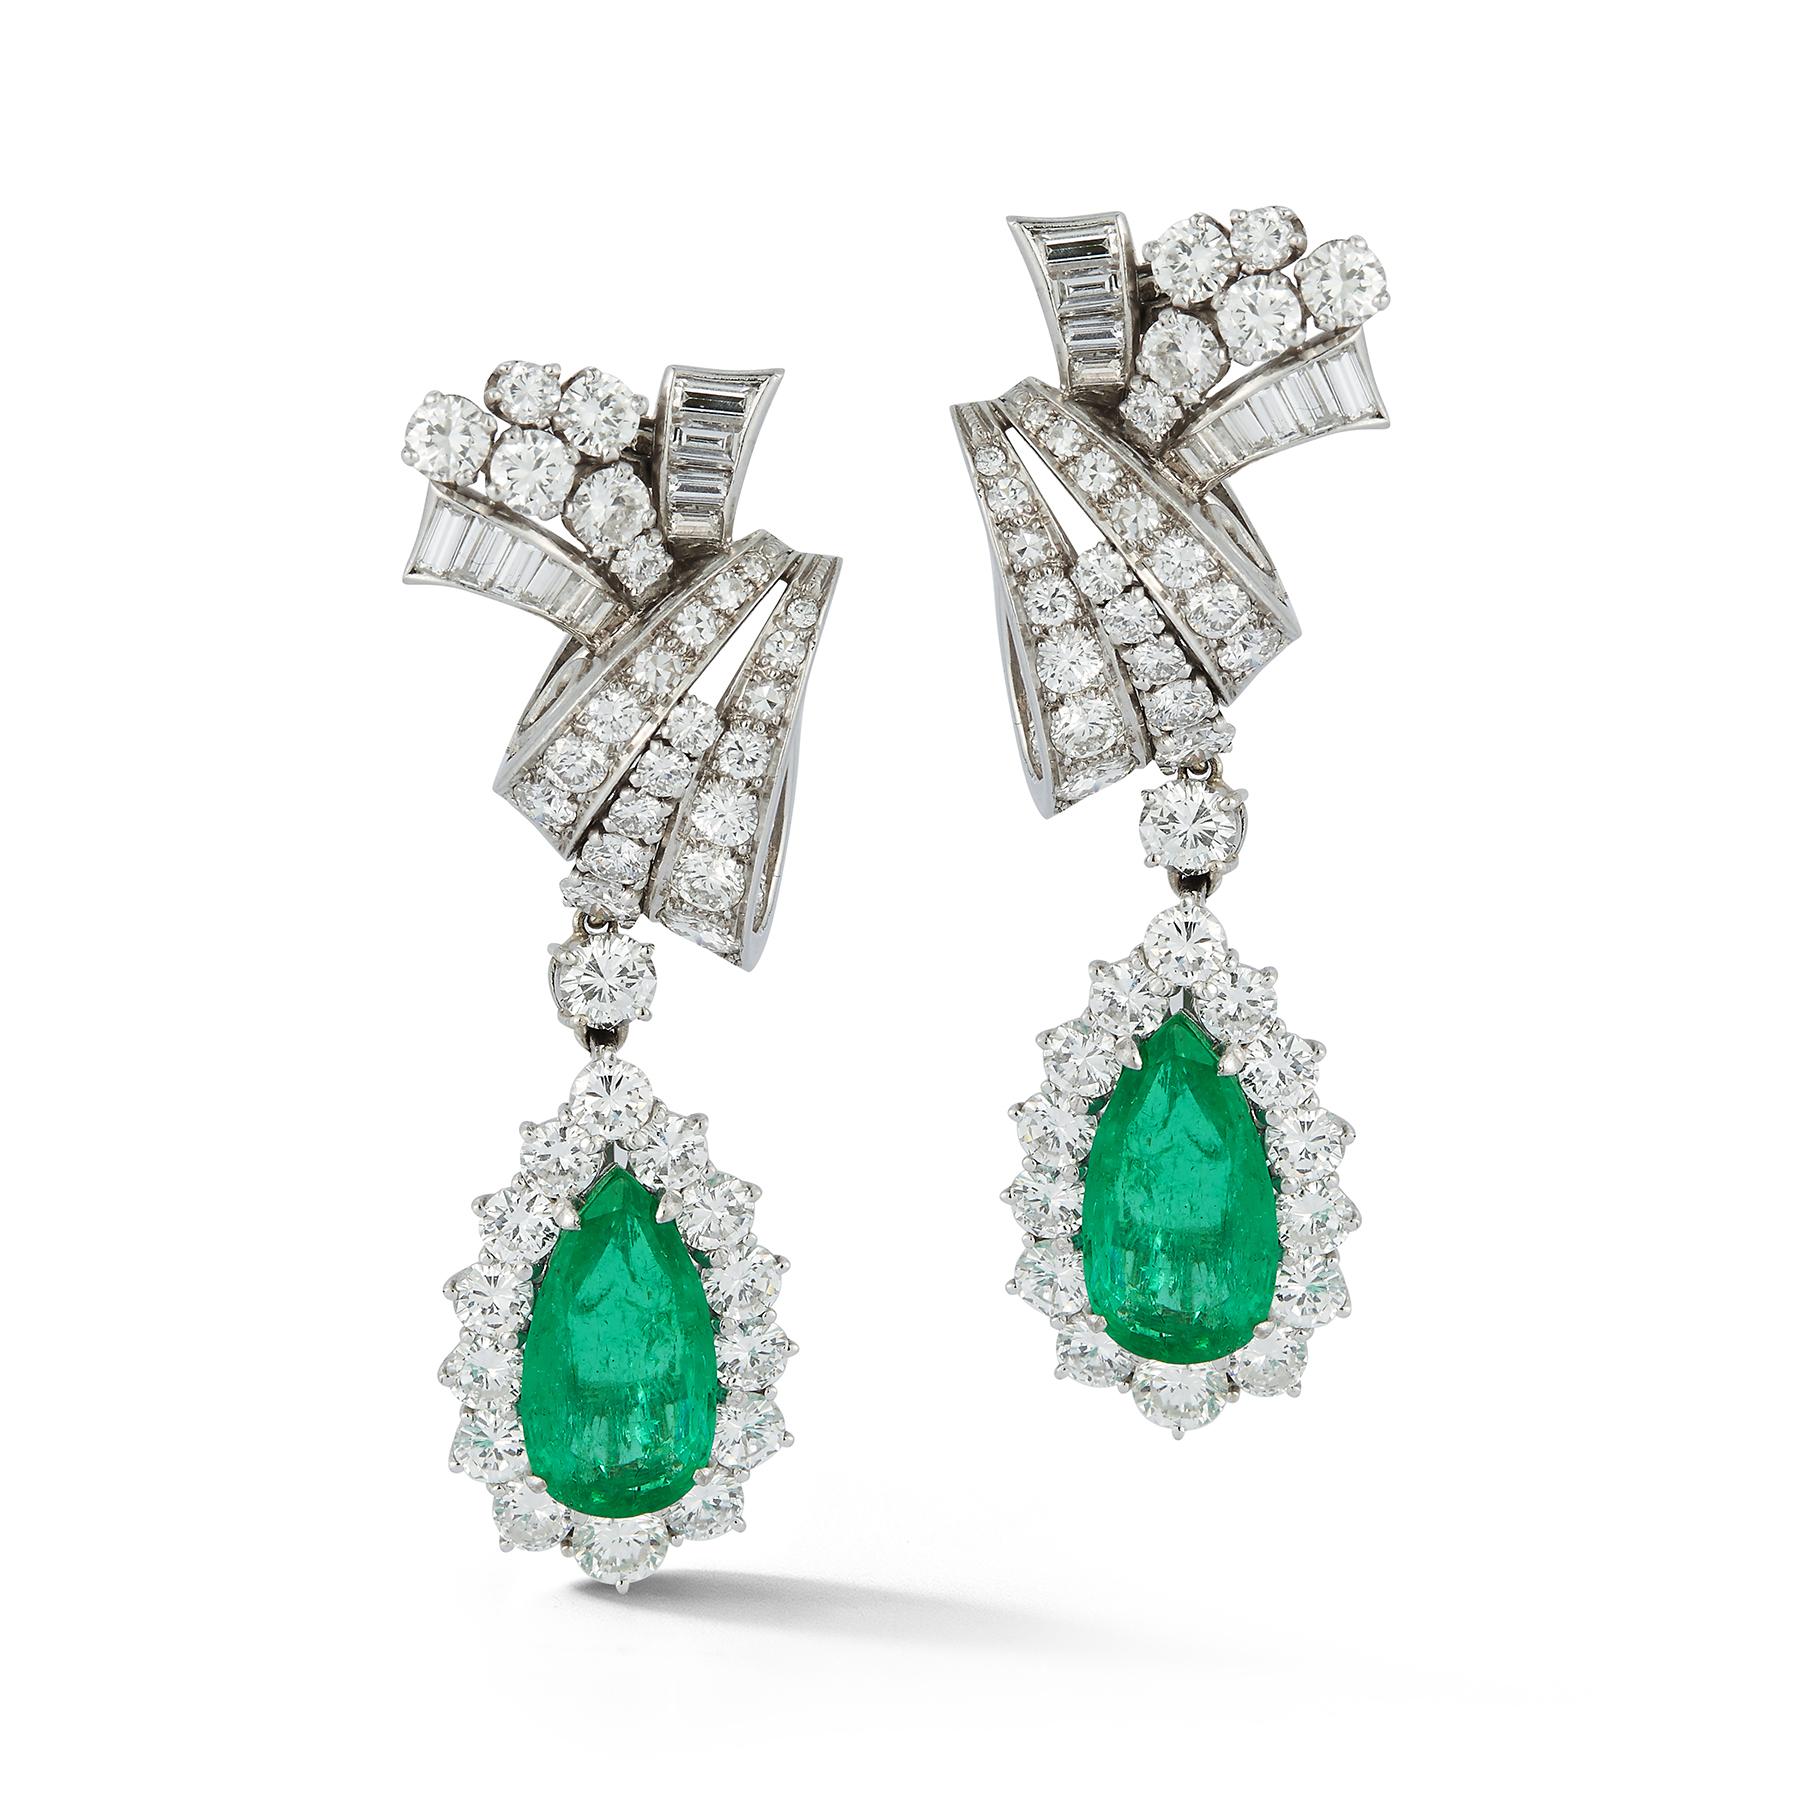 Pear Shape Emerald & Diamond Earrings, 2 pear shape emeralds approximately 3.64 cts , 20 baguette cut diamonds approximately .69 cts & 84 round cut diamonds approximately 4.62 cts set in platinum.

Measurements: 1.75